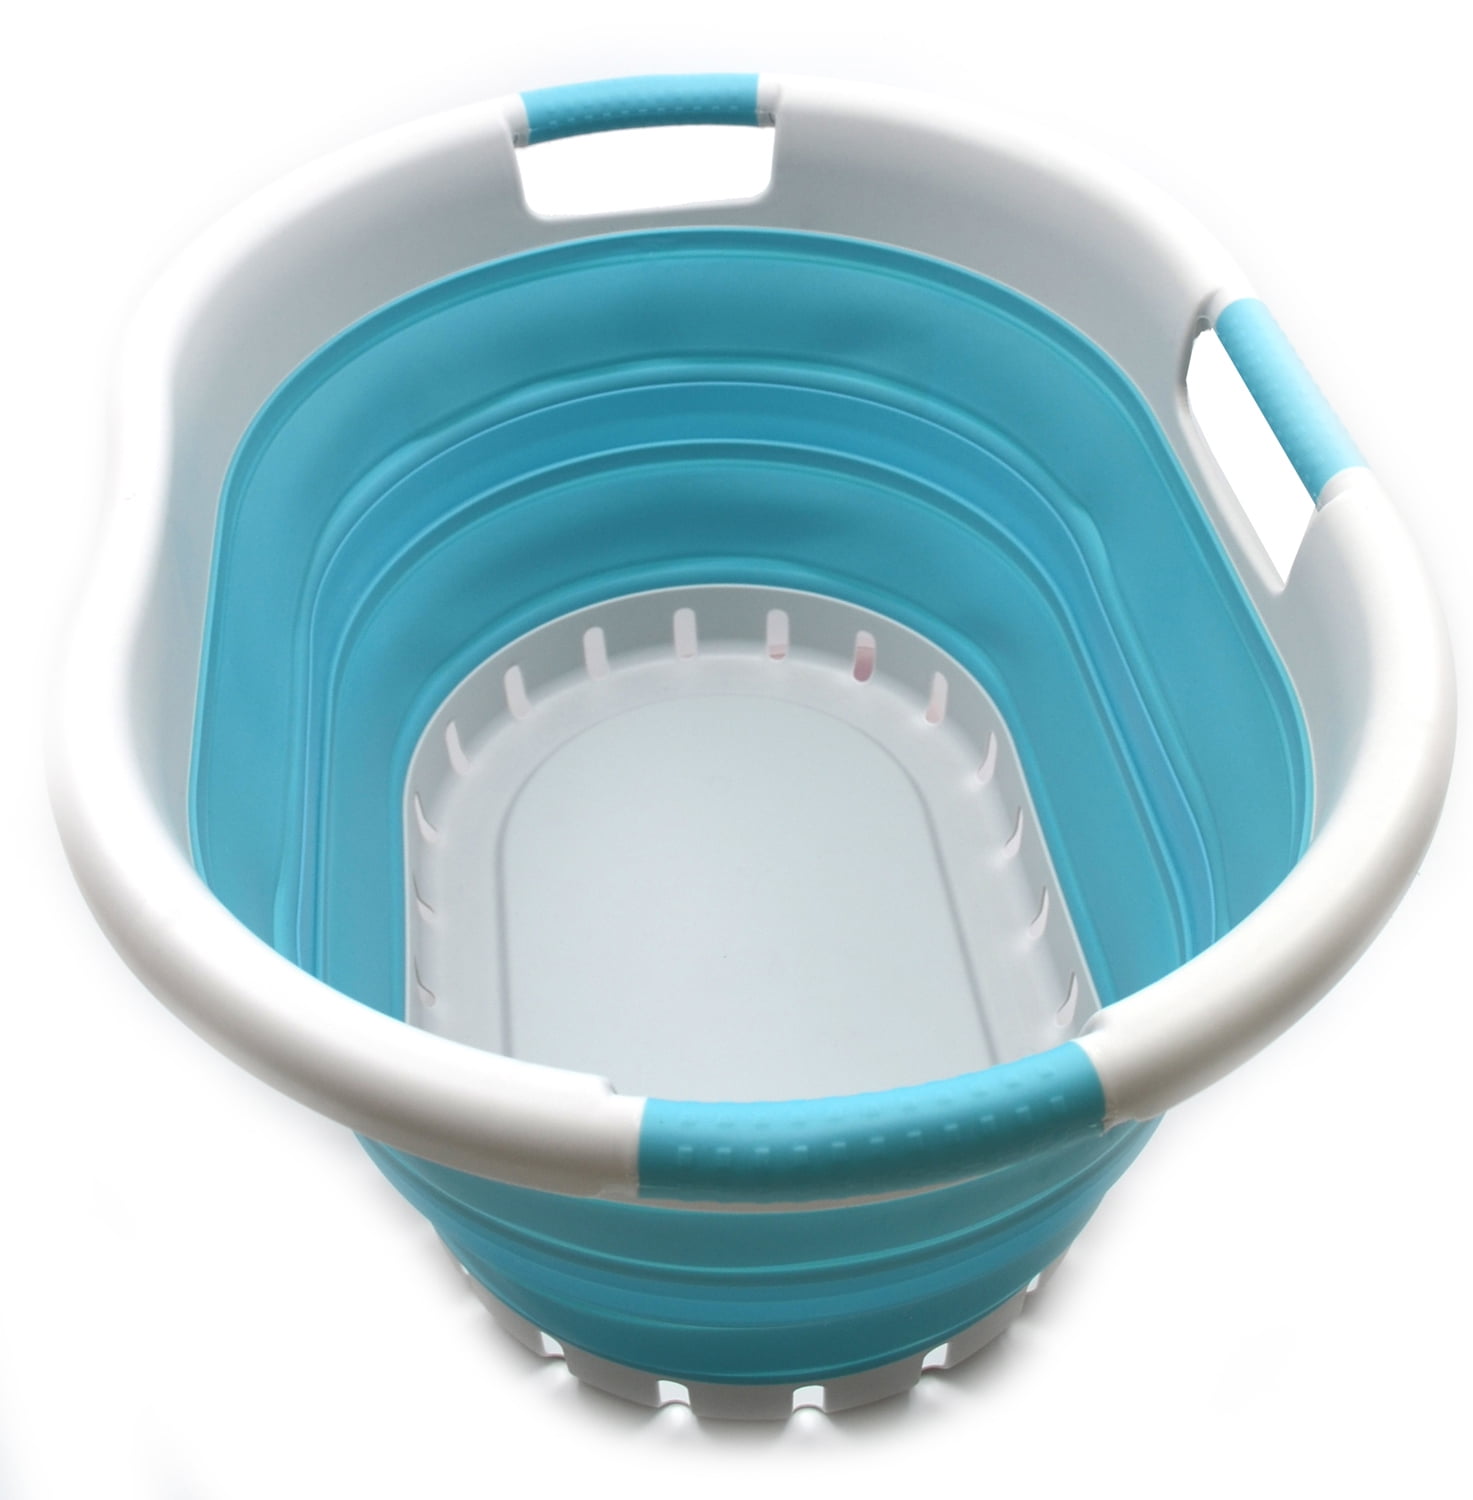 Oval Tub/Basket SAMMART Collapsible Plastic Laundry Basket Foldable Storage Container/Organizer Portable Washing Tub Space Saving Laundry Hamper Bright Blue 